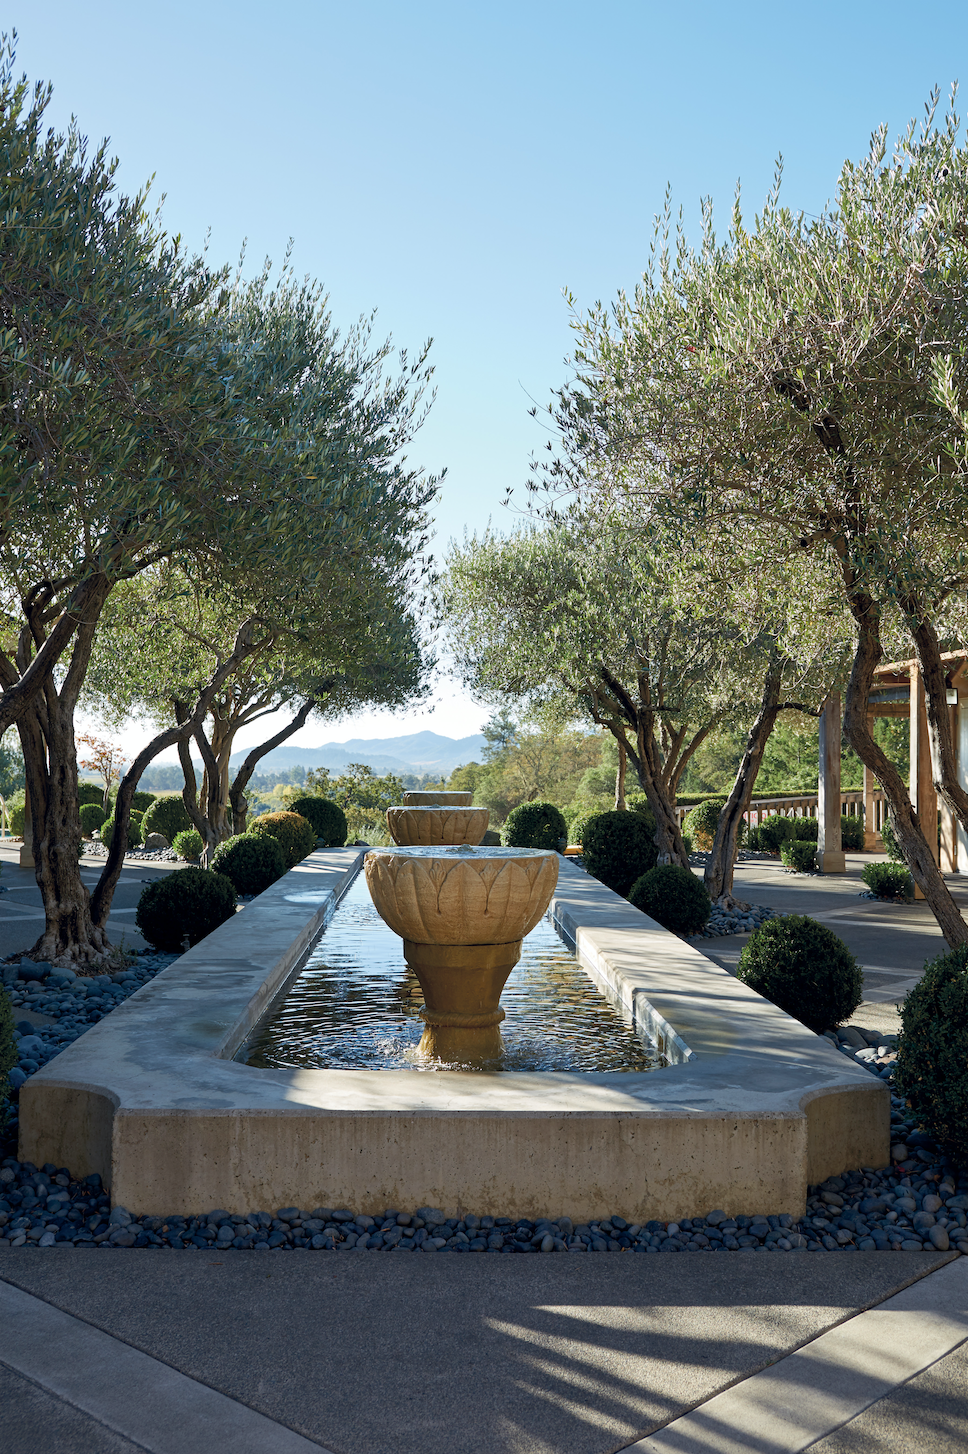 The Serene Beauty of Garden Fountains